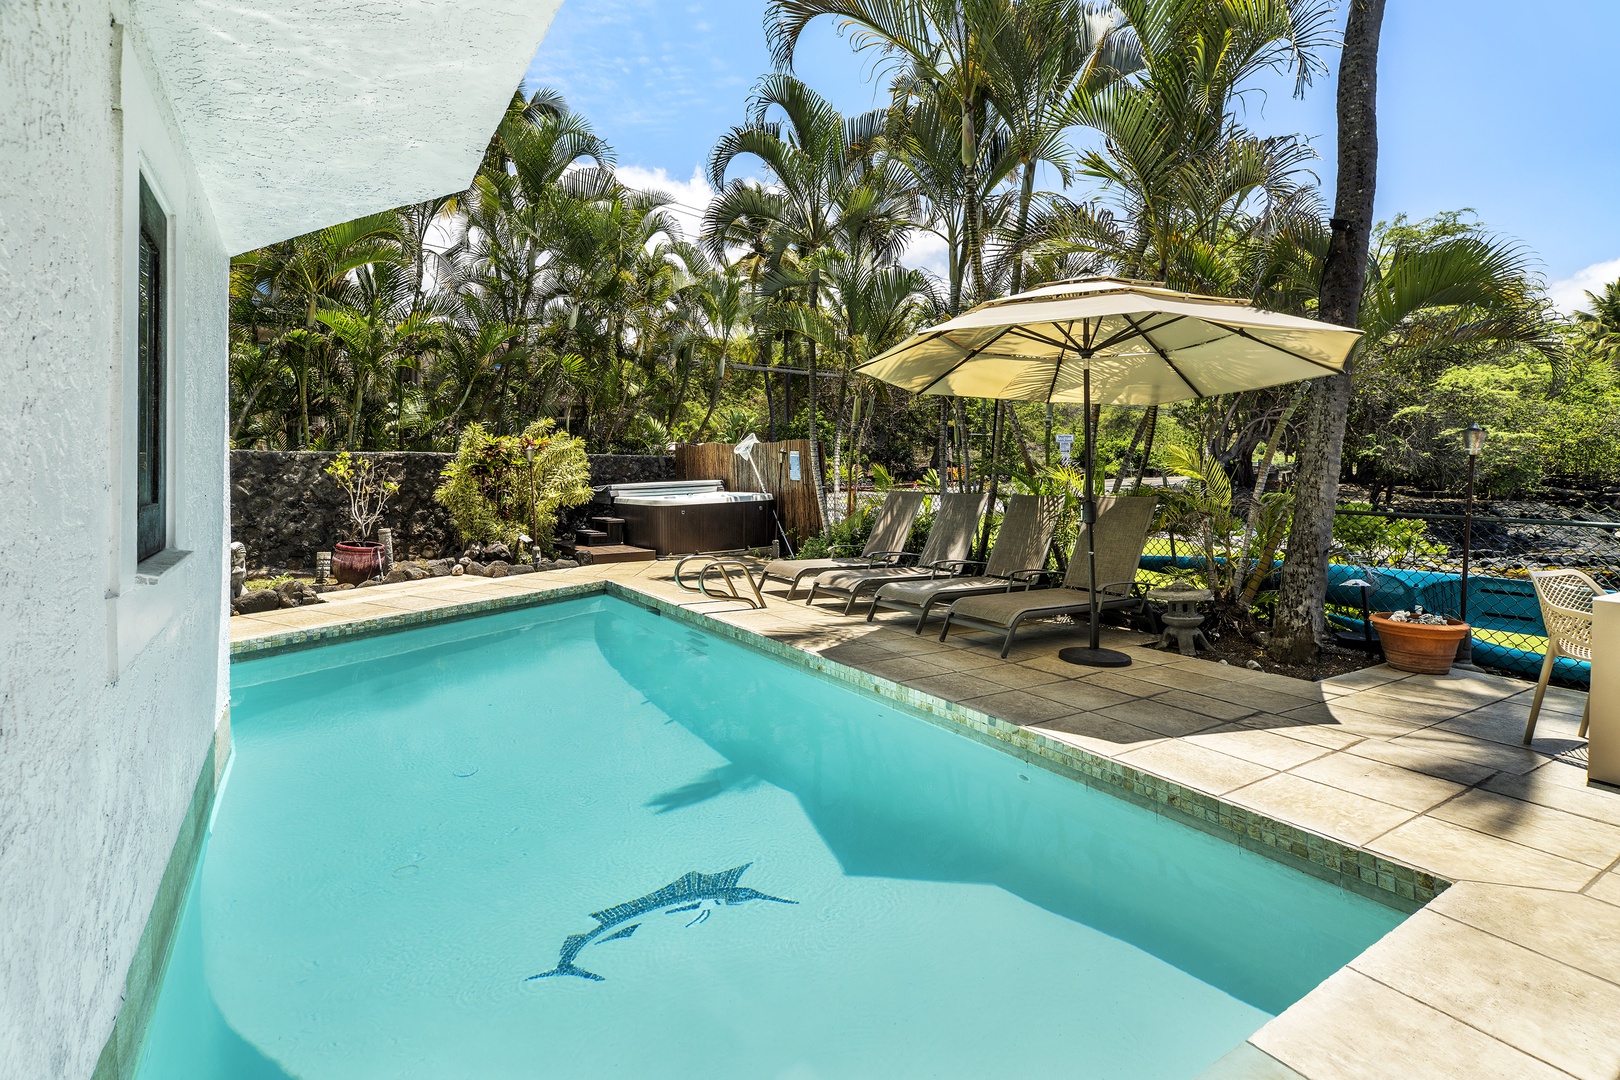 Kailua Kona Vacation Rentals, Kona's Shangri La - 